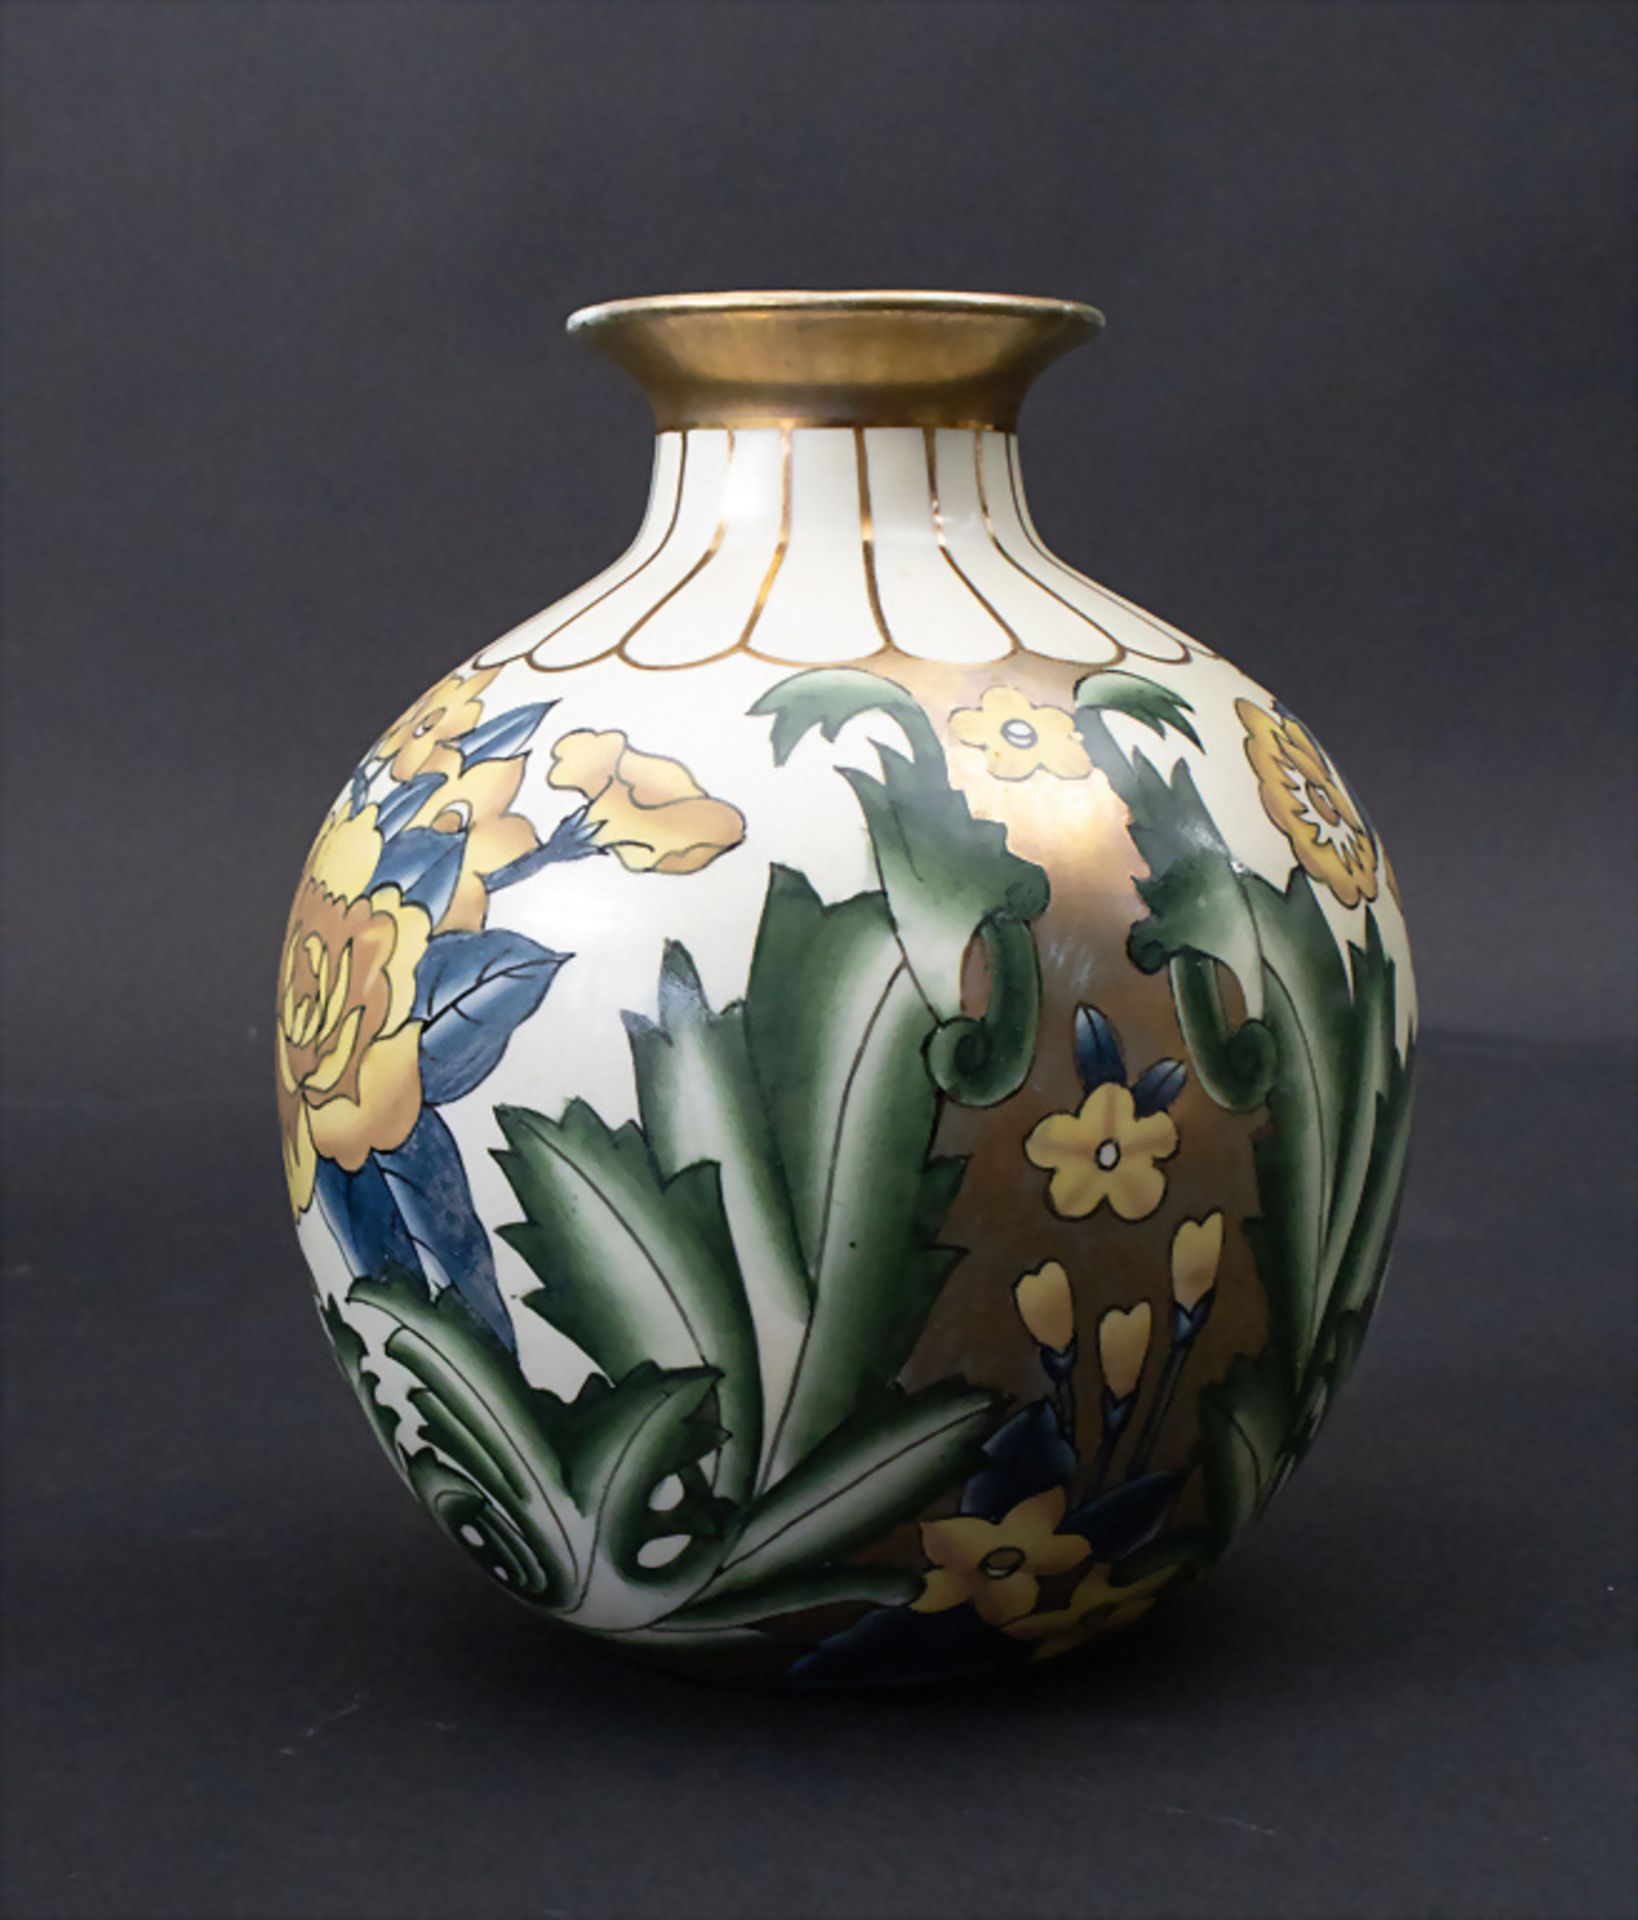 Porzellan Ziervase / A decorative porcelain vase, G. Fieravino, Italien, 20. Jh. - Image 2 of 5